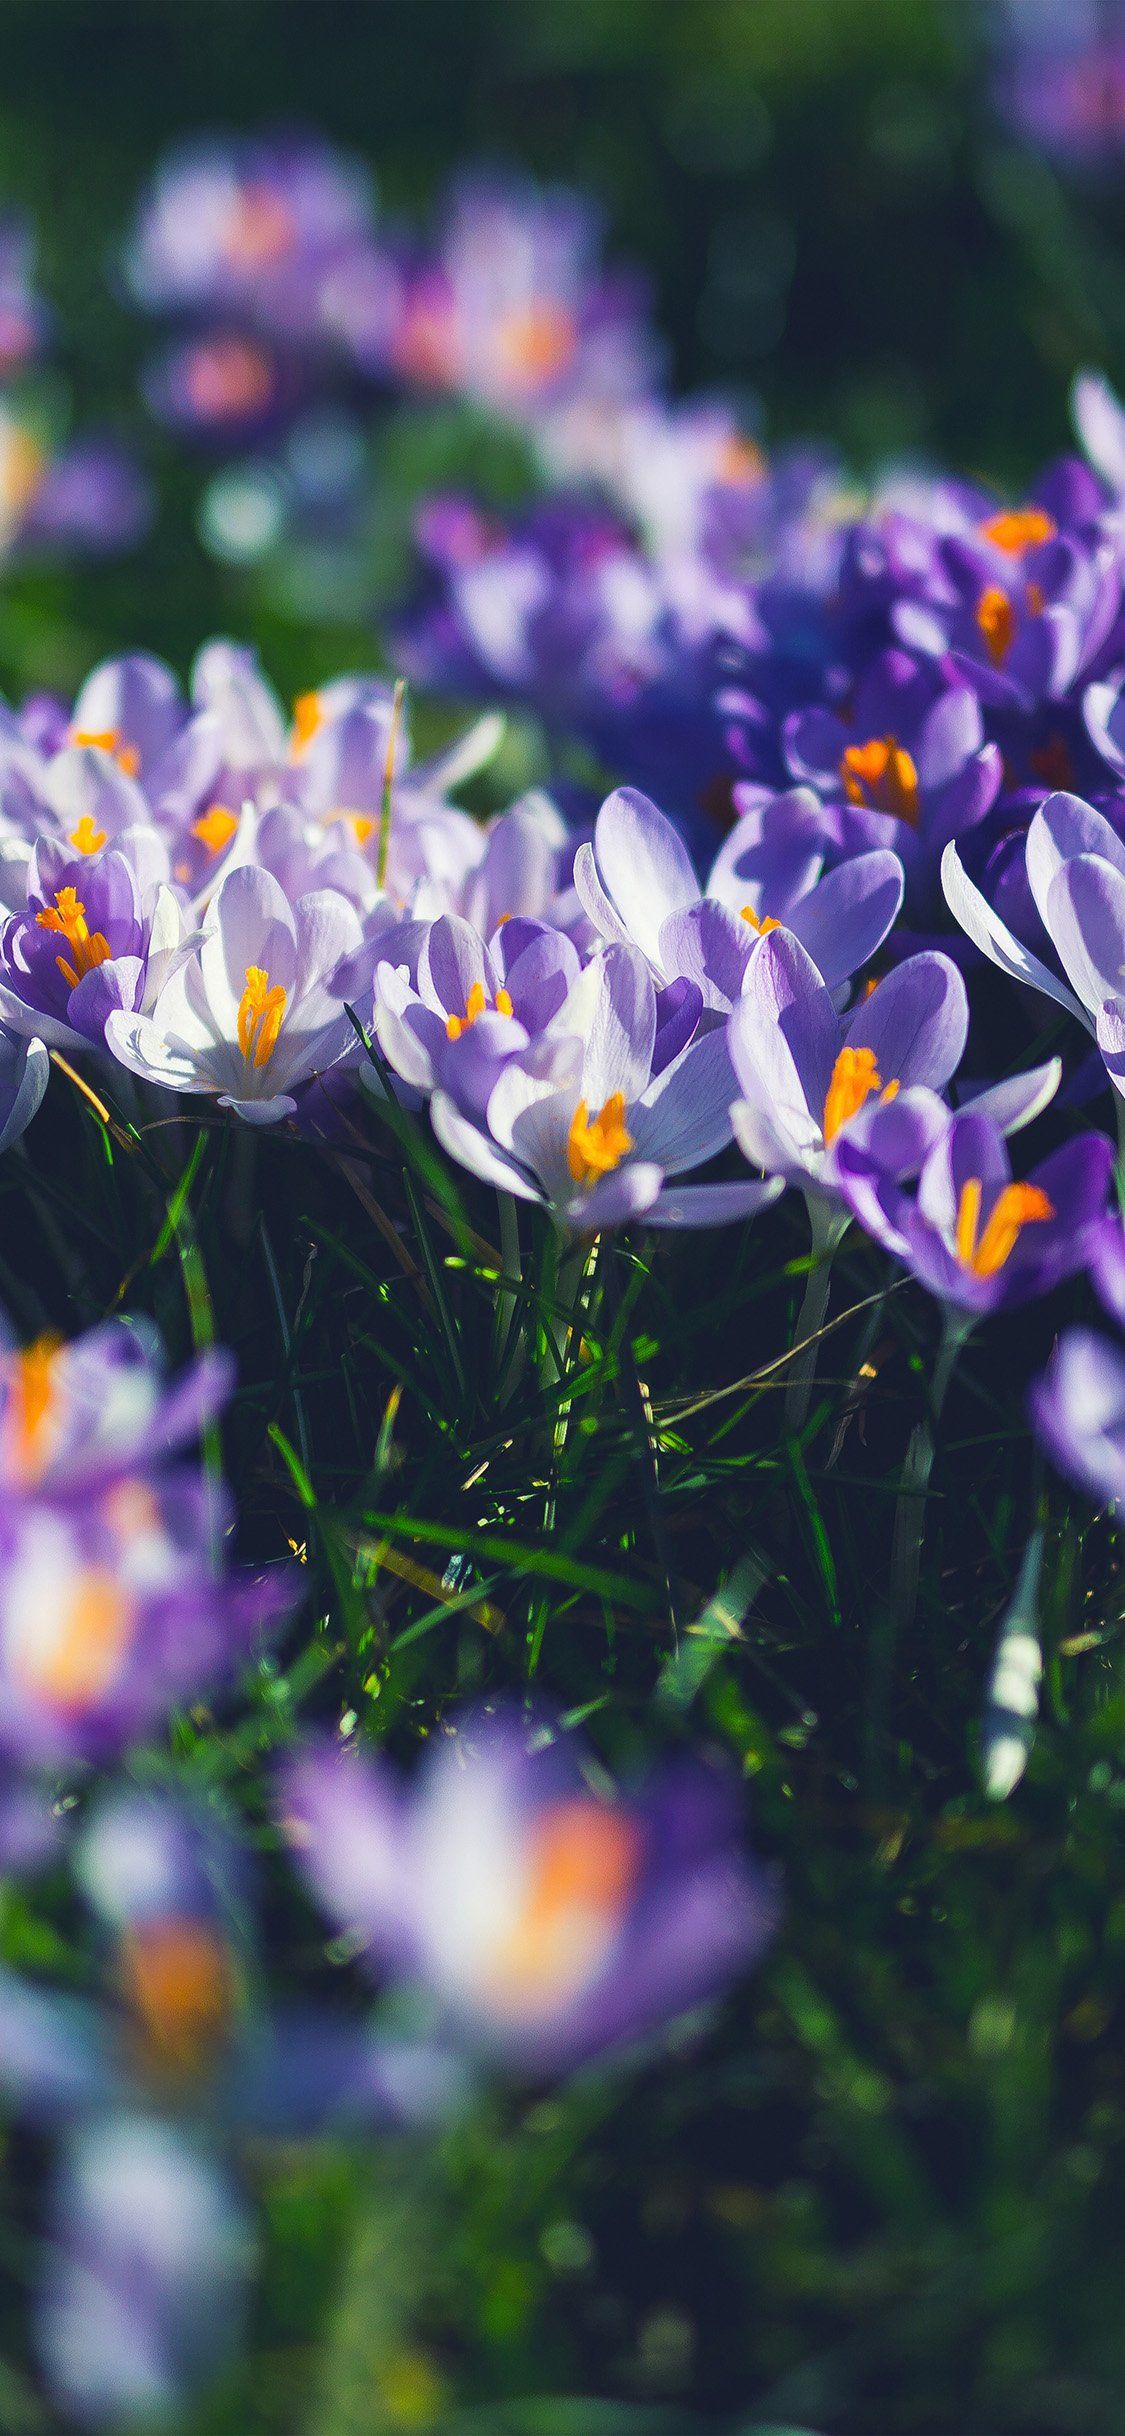 iPhone X wallpaper. flower purple spring nature